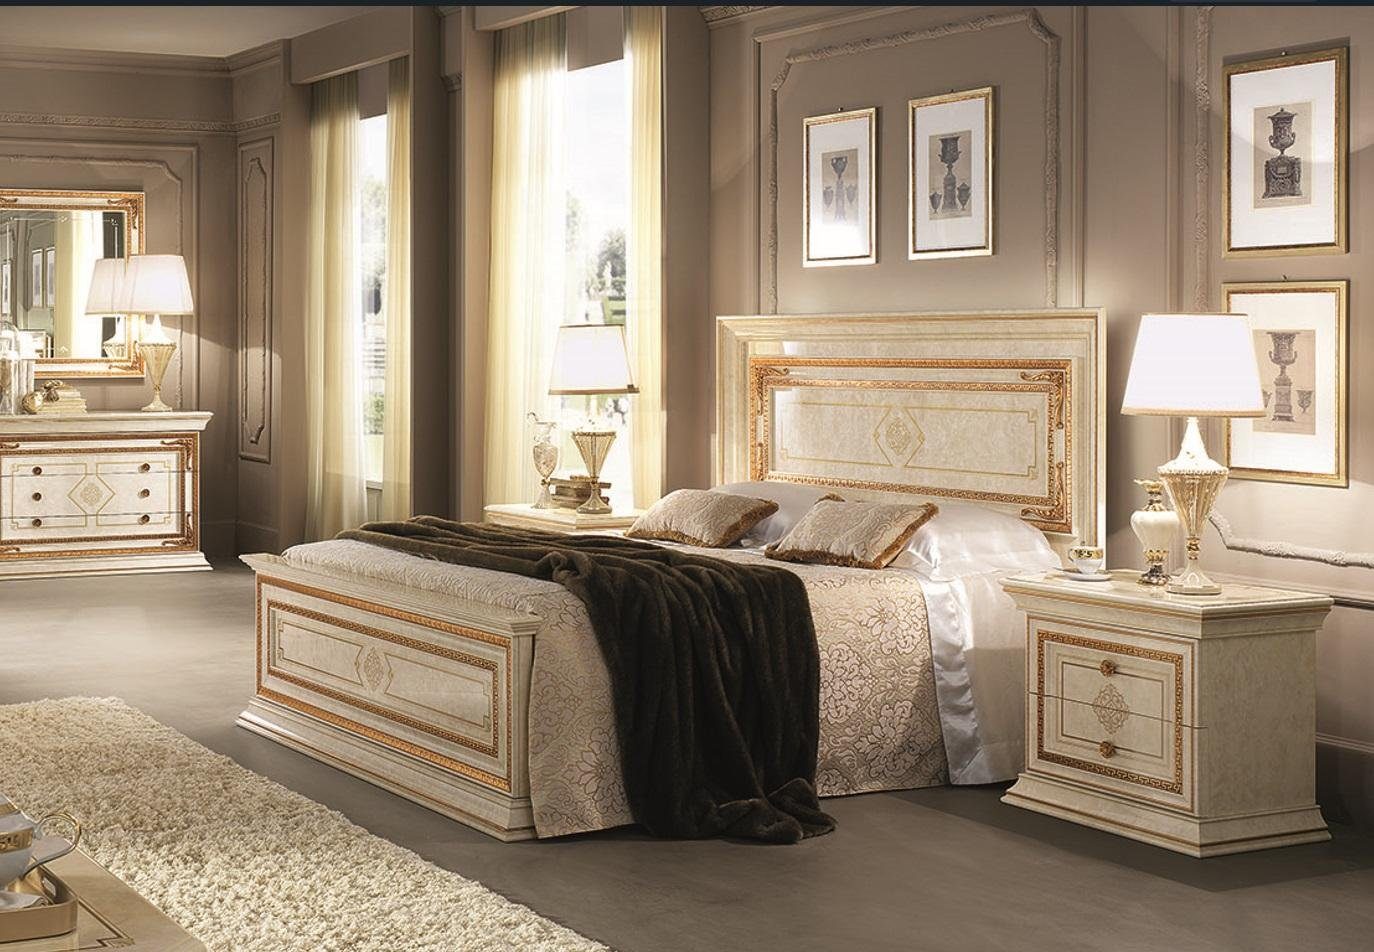 JVmoebel Bett Bett Polster Design Luxus Doppel Hotel Betten Holz Schlaf Zimmer